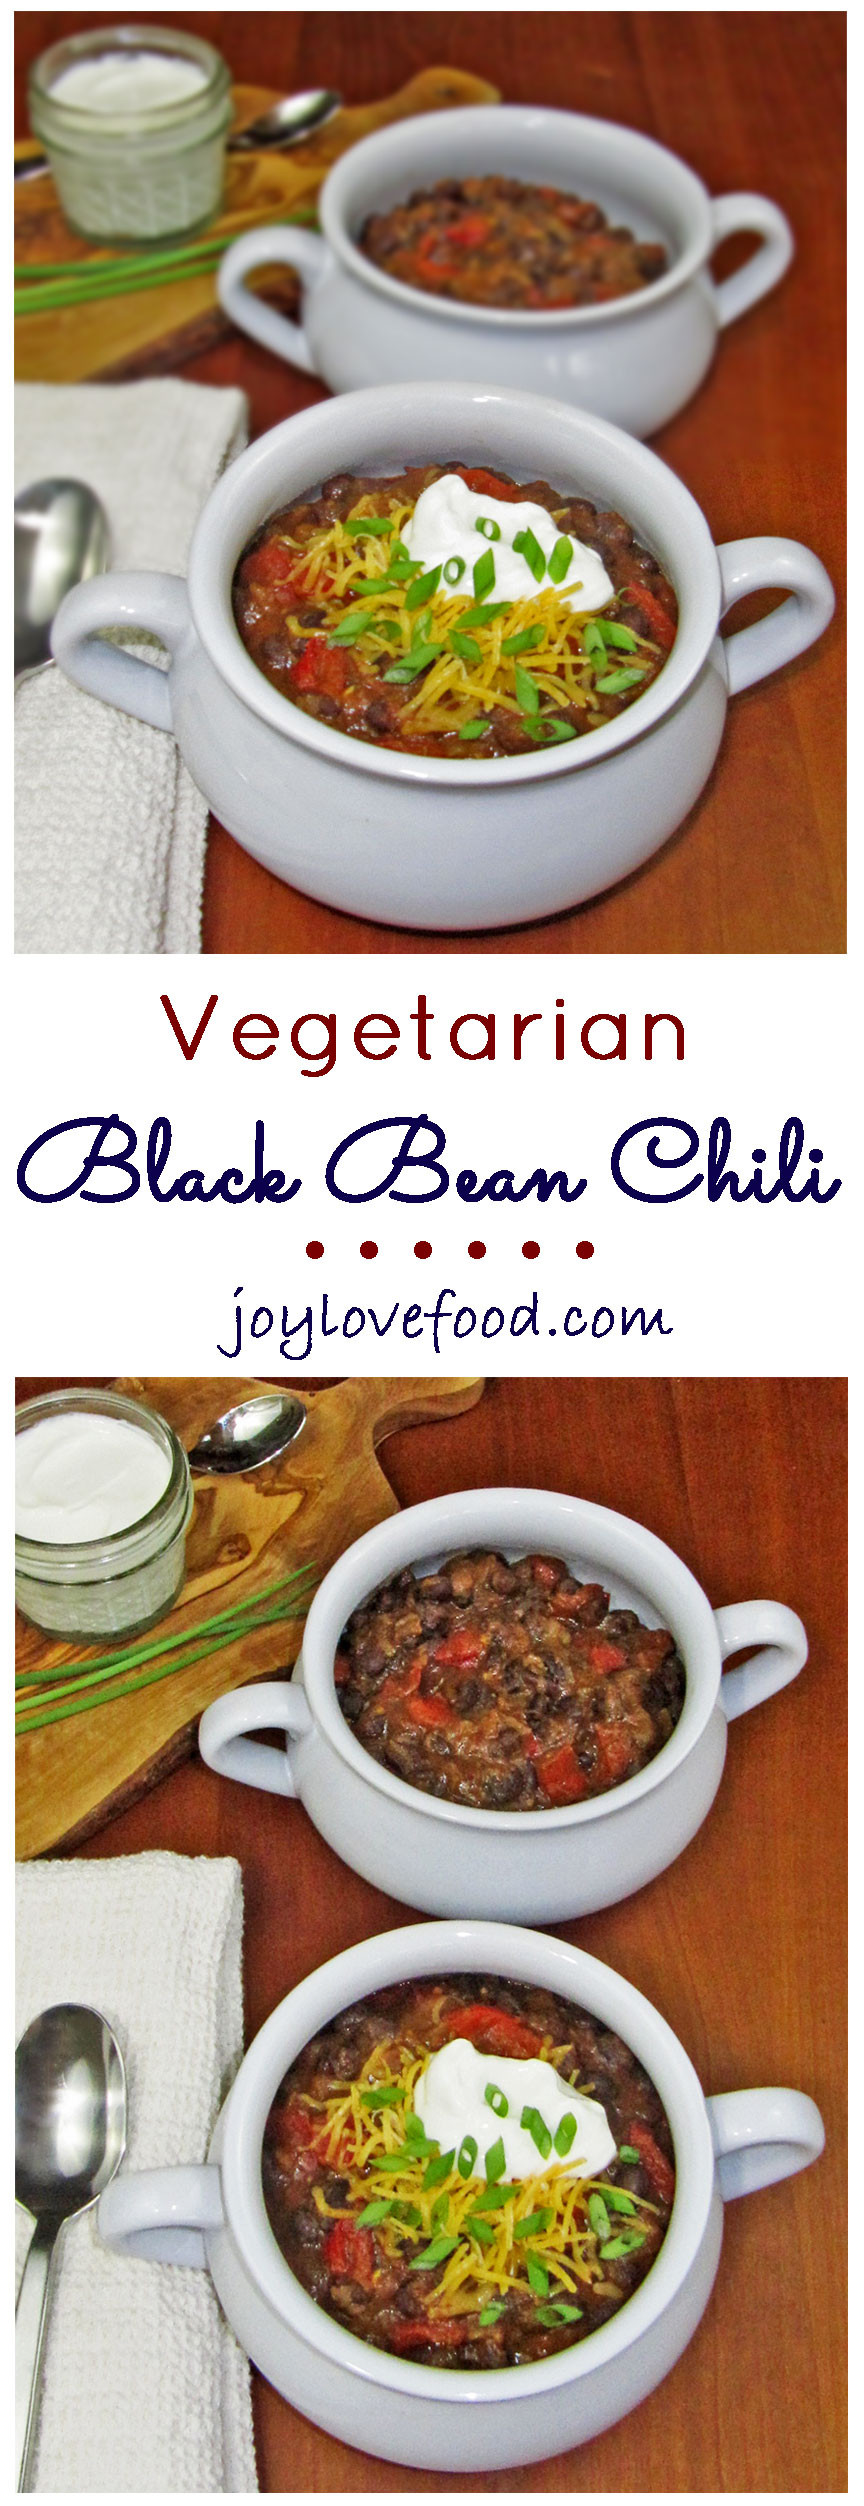 Vegetarian Black Bean Chili Recipe
 Ve arian Black Bean Chili Joy Love Food